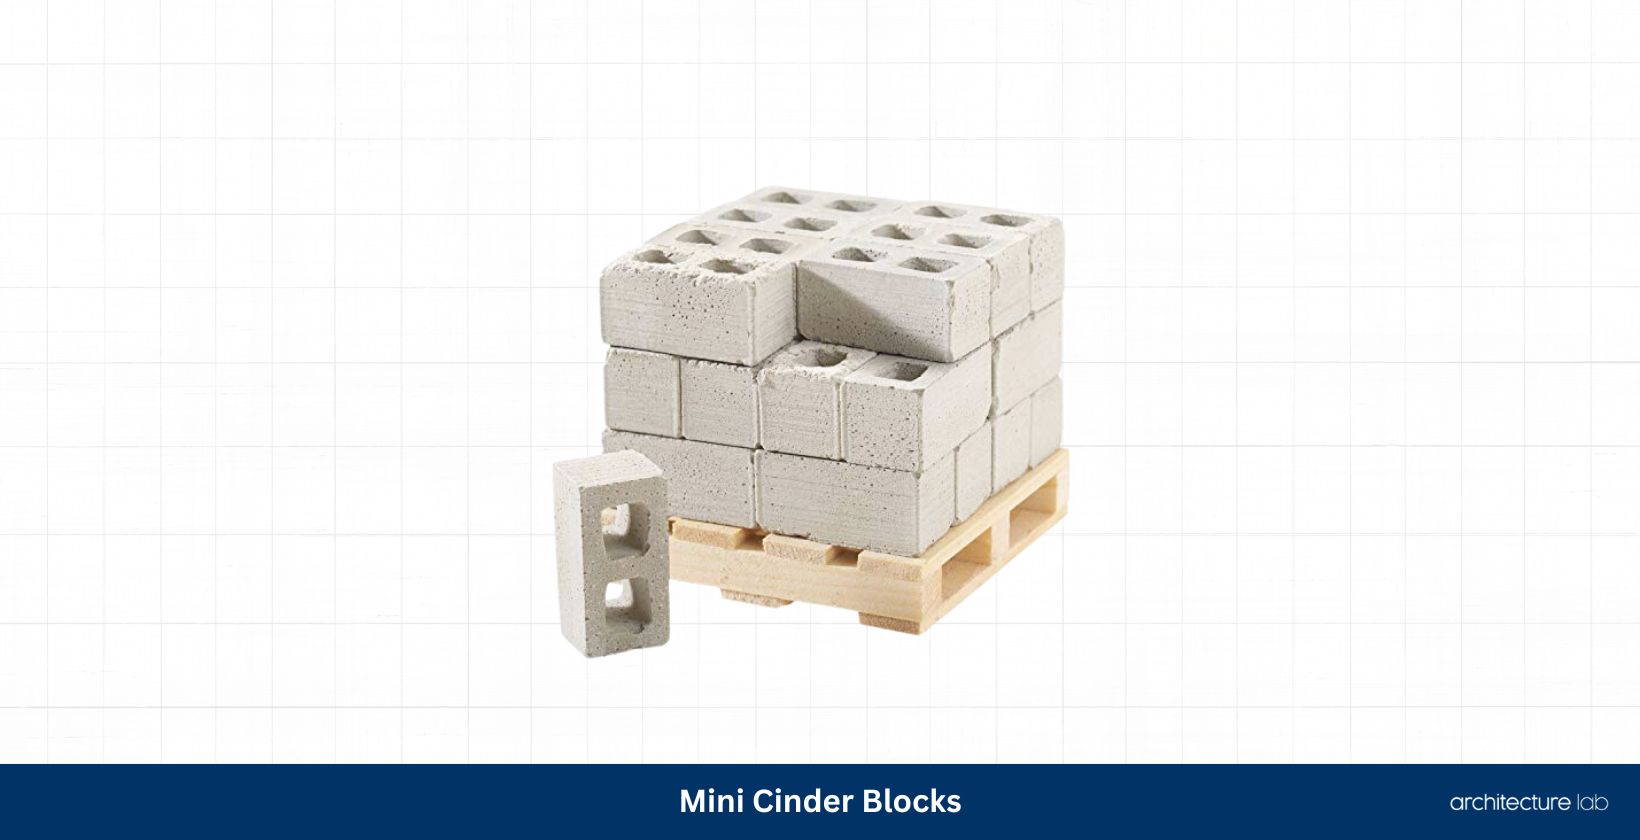 Mini cinder blocks